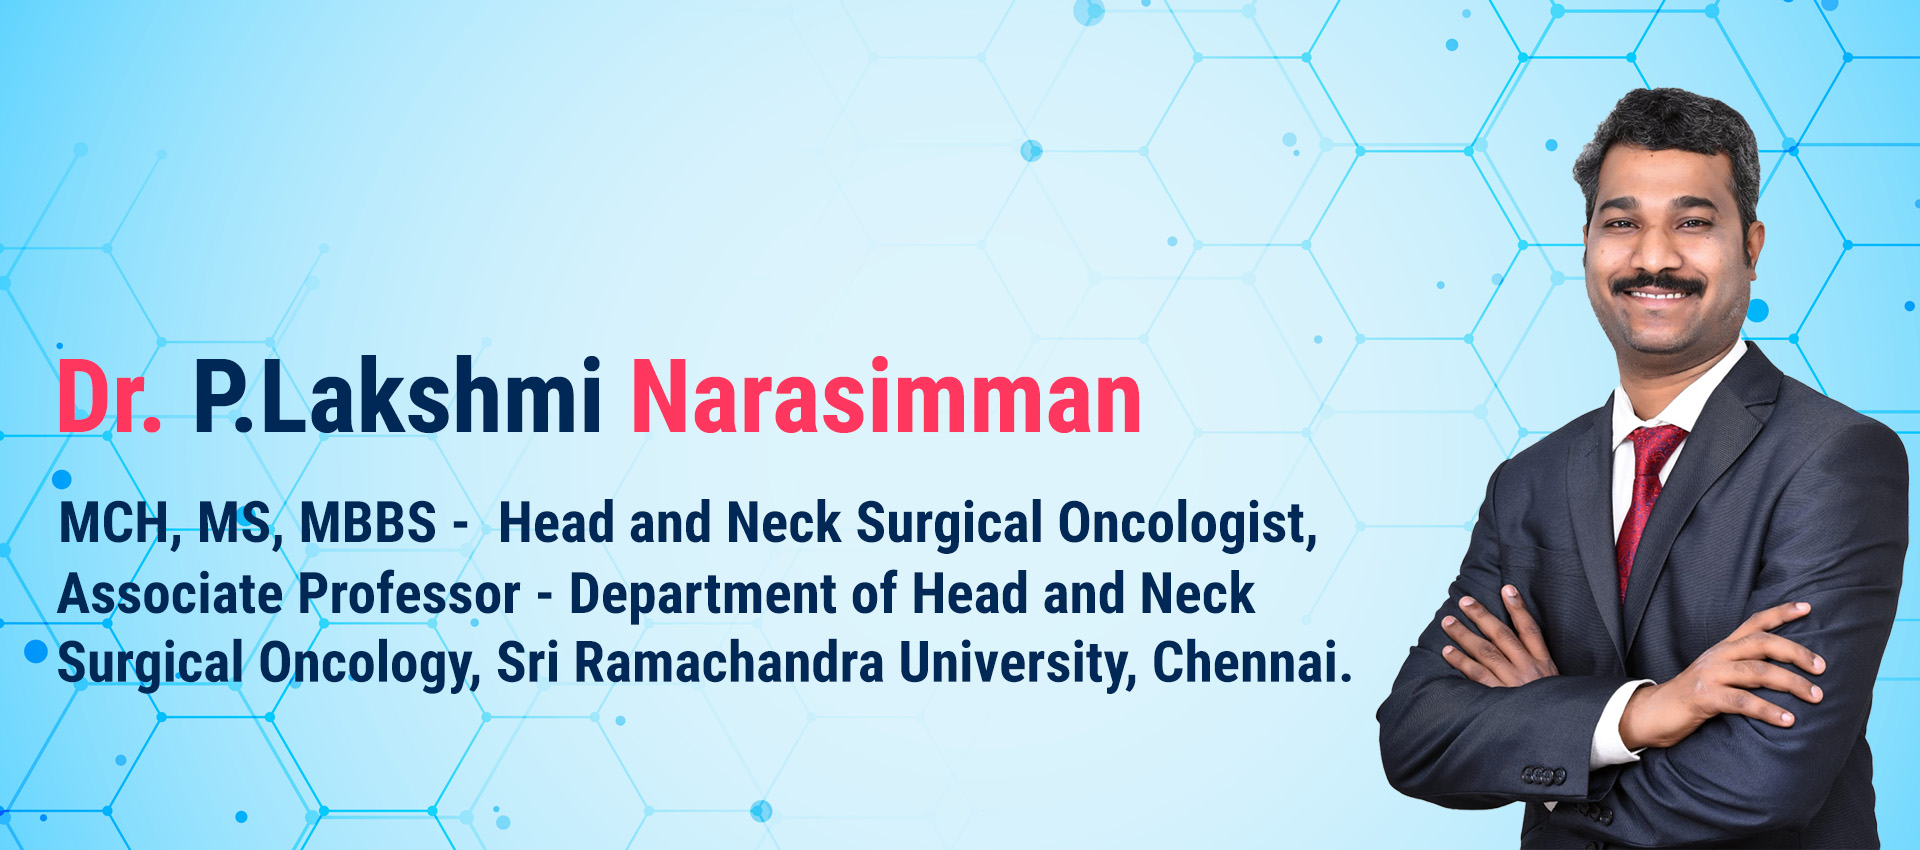 Dr P.Lakshmi Narasimman